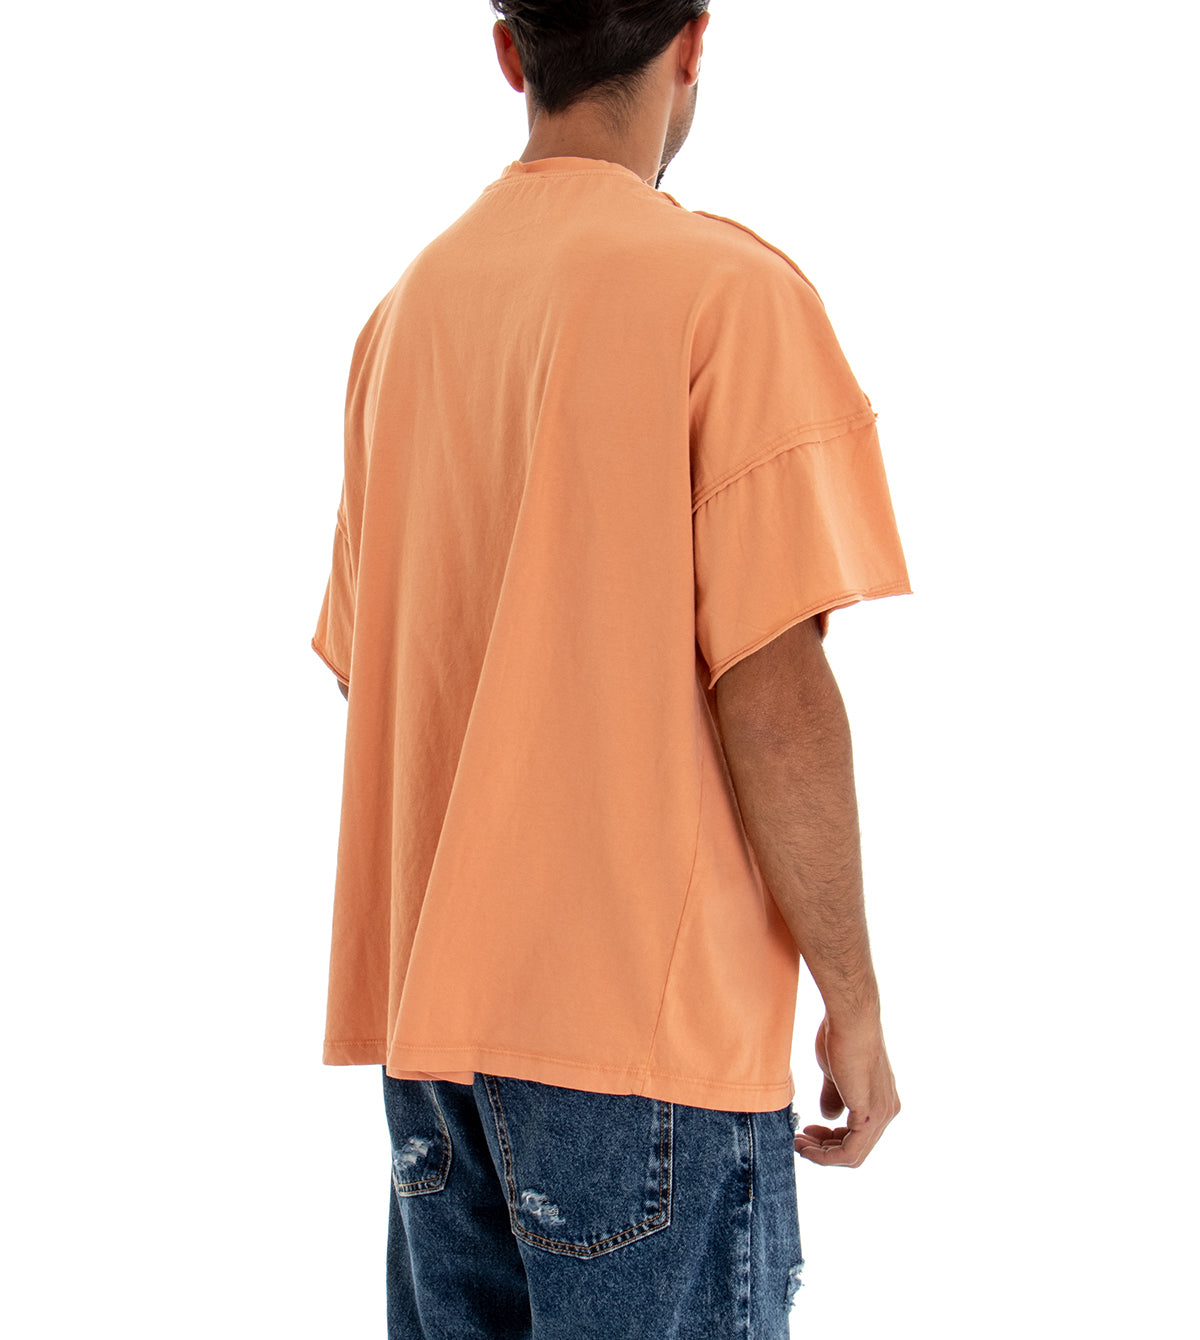 T-shirt Uomo Tinta Unita Over Salmone Girocollo Cotone GIOSAL